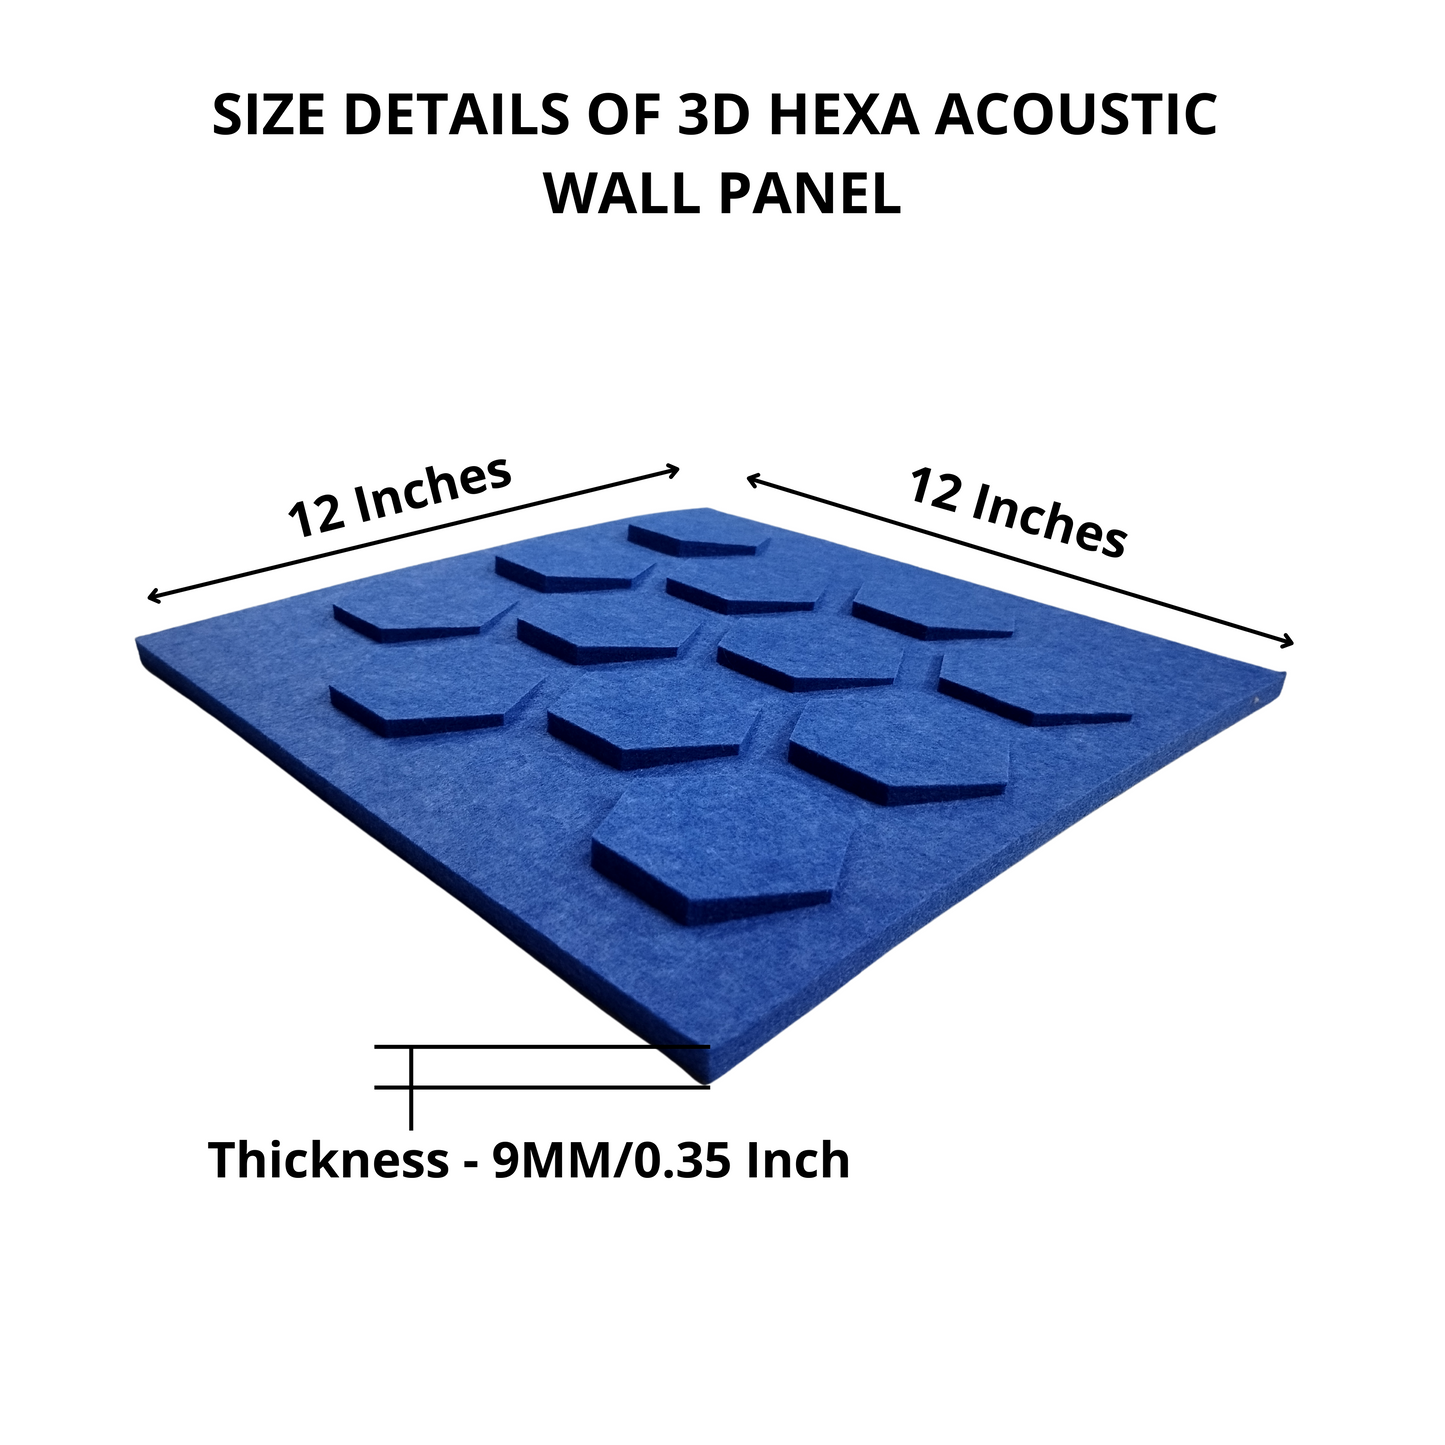 3D Hexa Acoustic Wall Panels, 12"x12"x 9mm, Blue Soundproof Panels | Acoustic Panel for Soundproofing